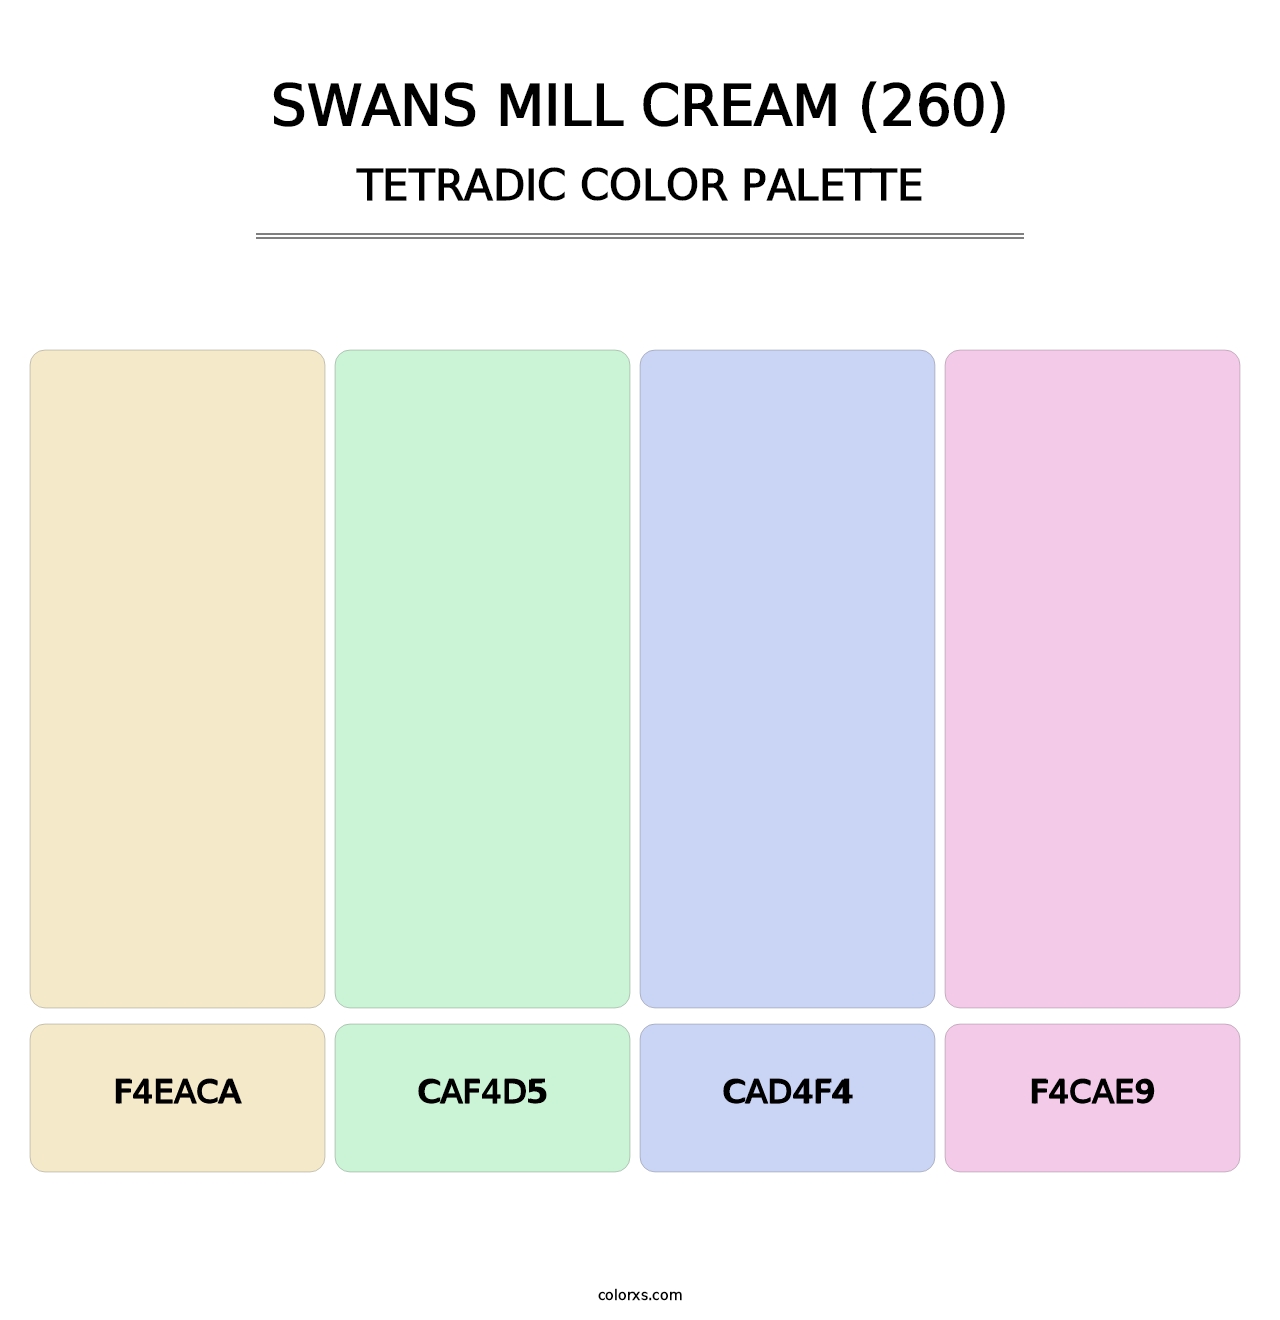 Swans Mill Cream (260) - Tetradic Color Palette